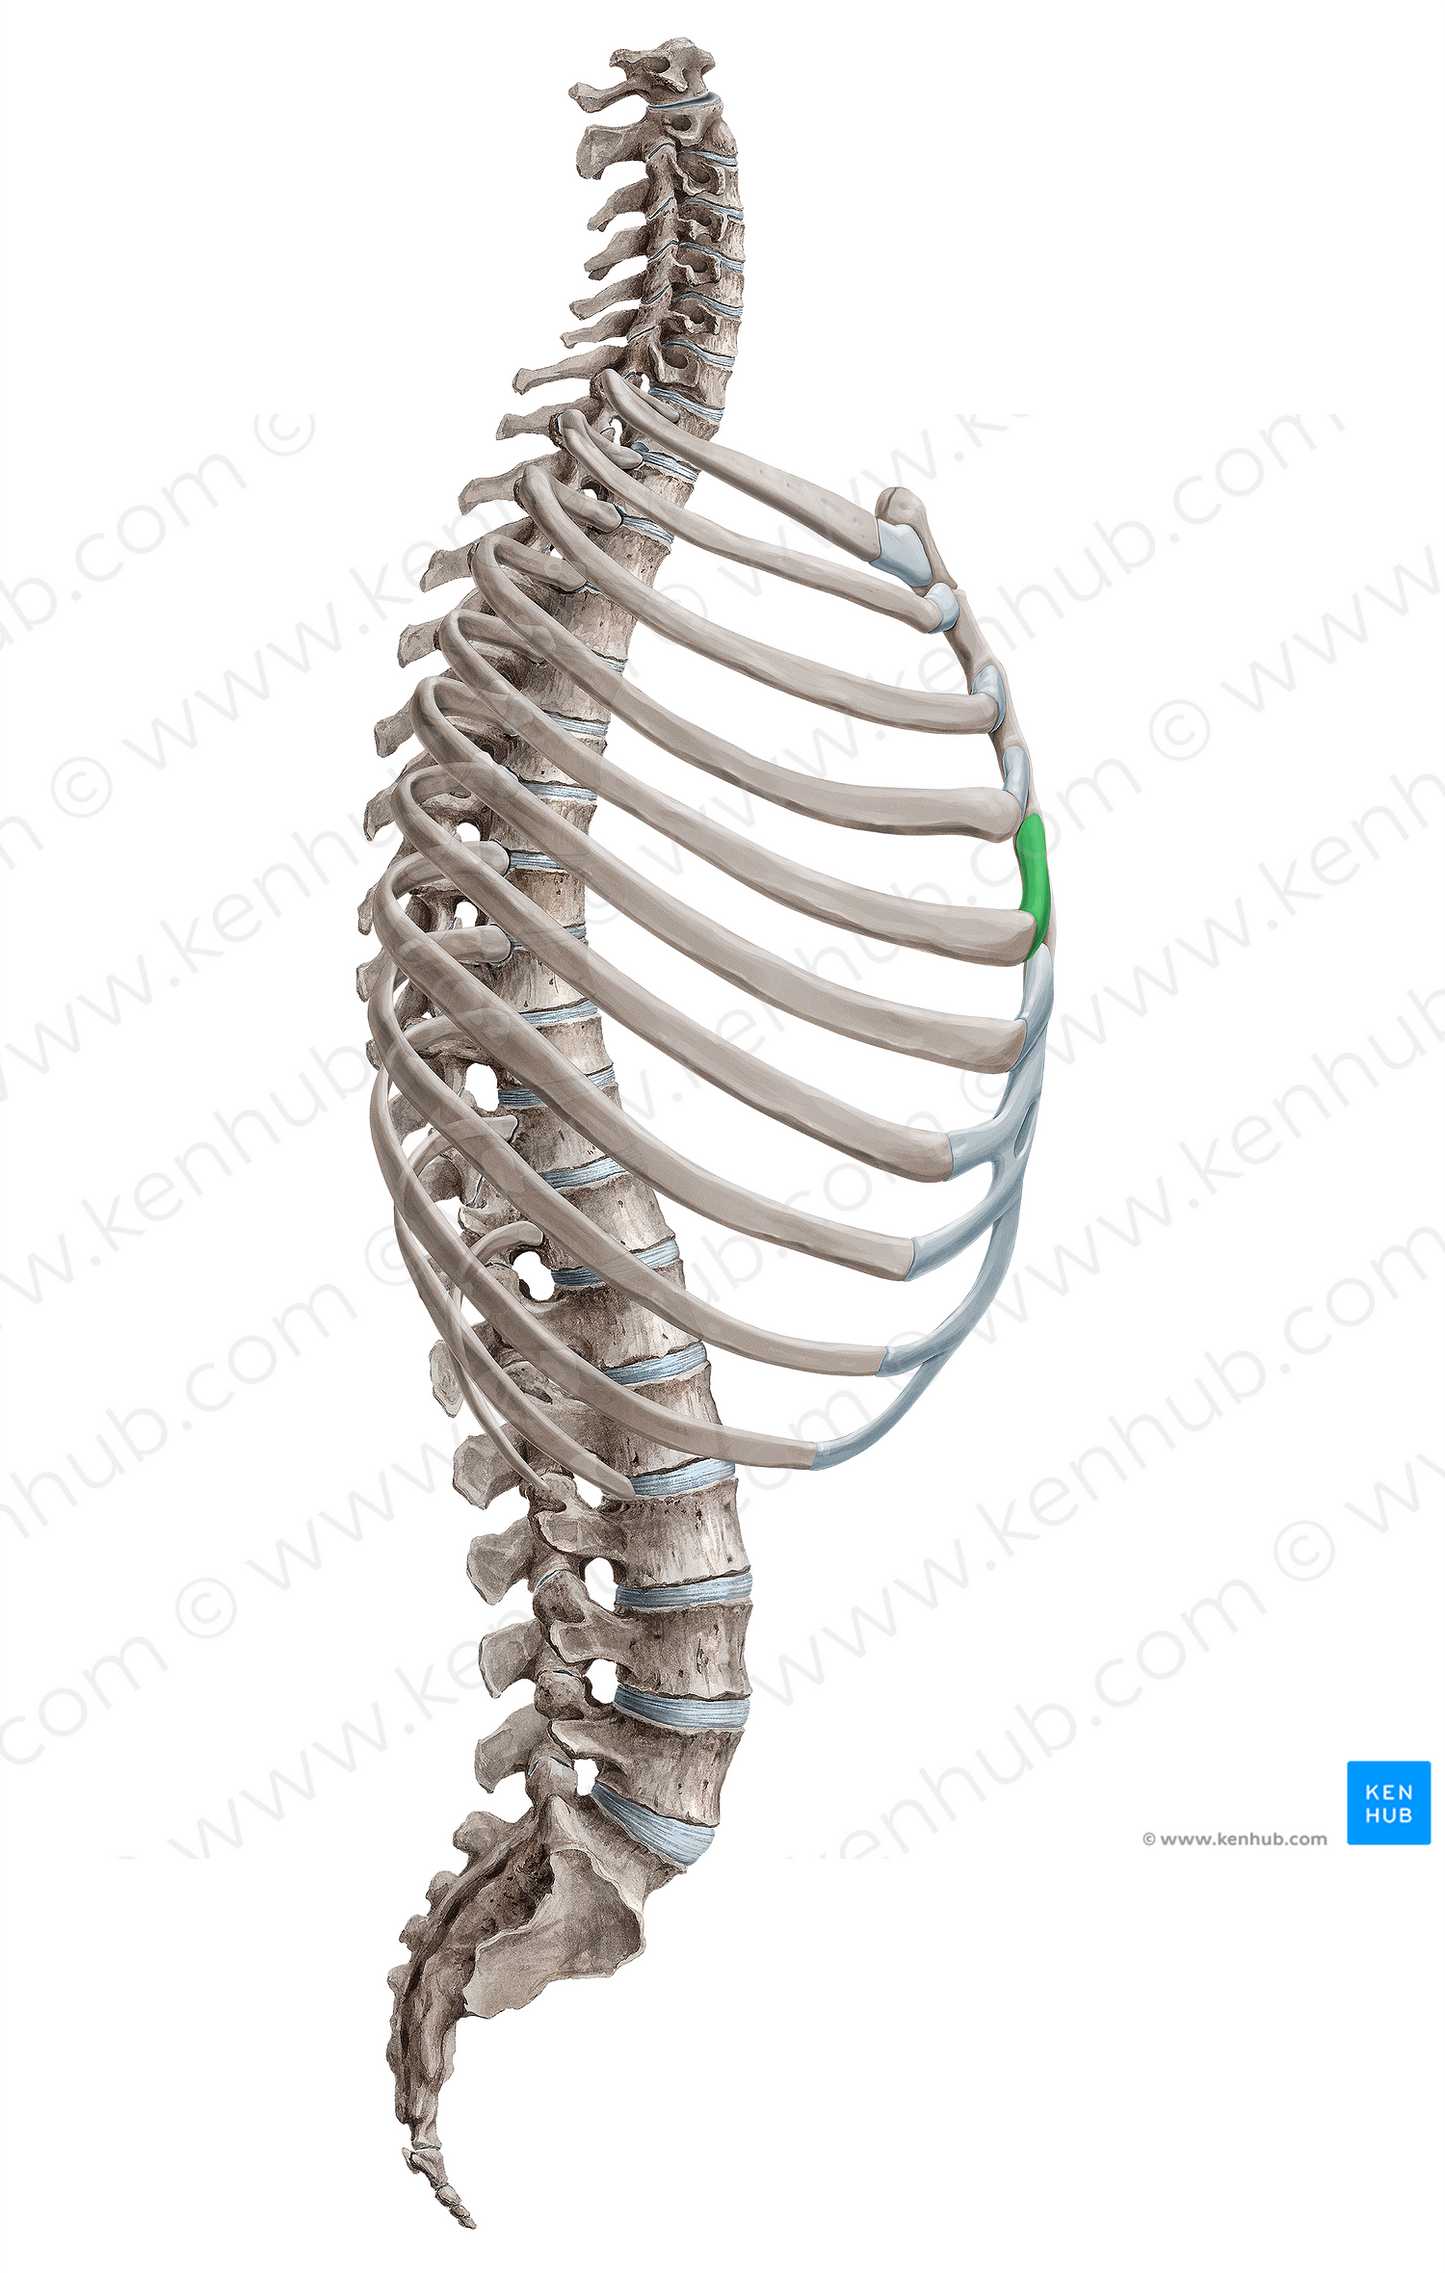 Costal cartilage of 5th rib (#18156)